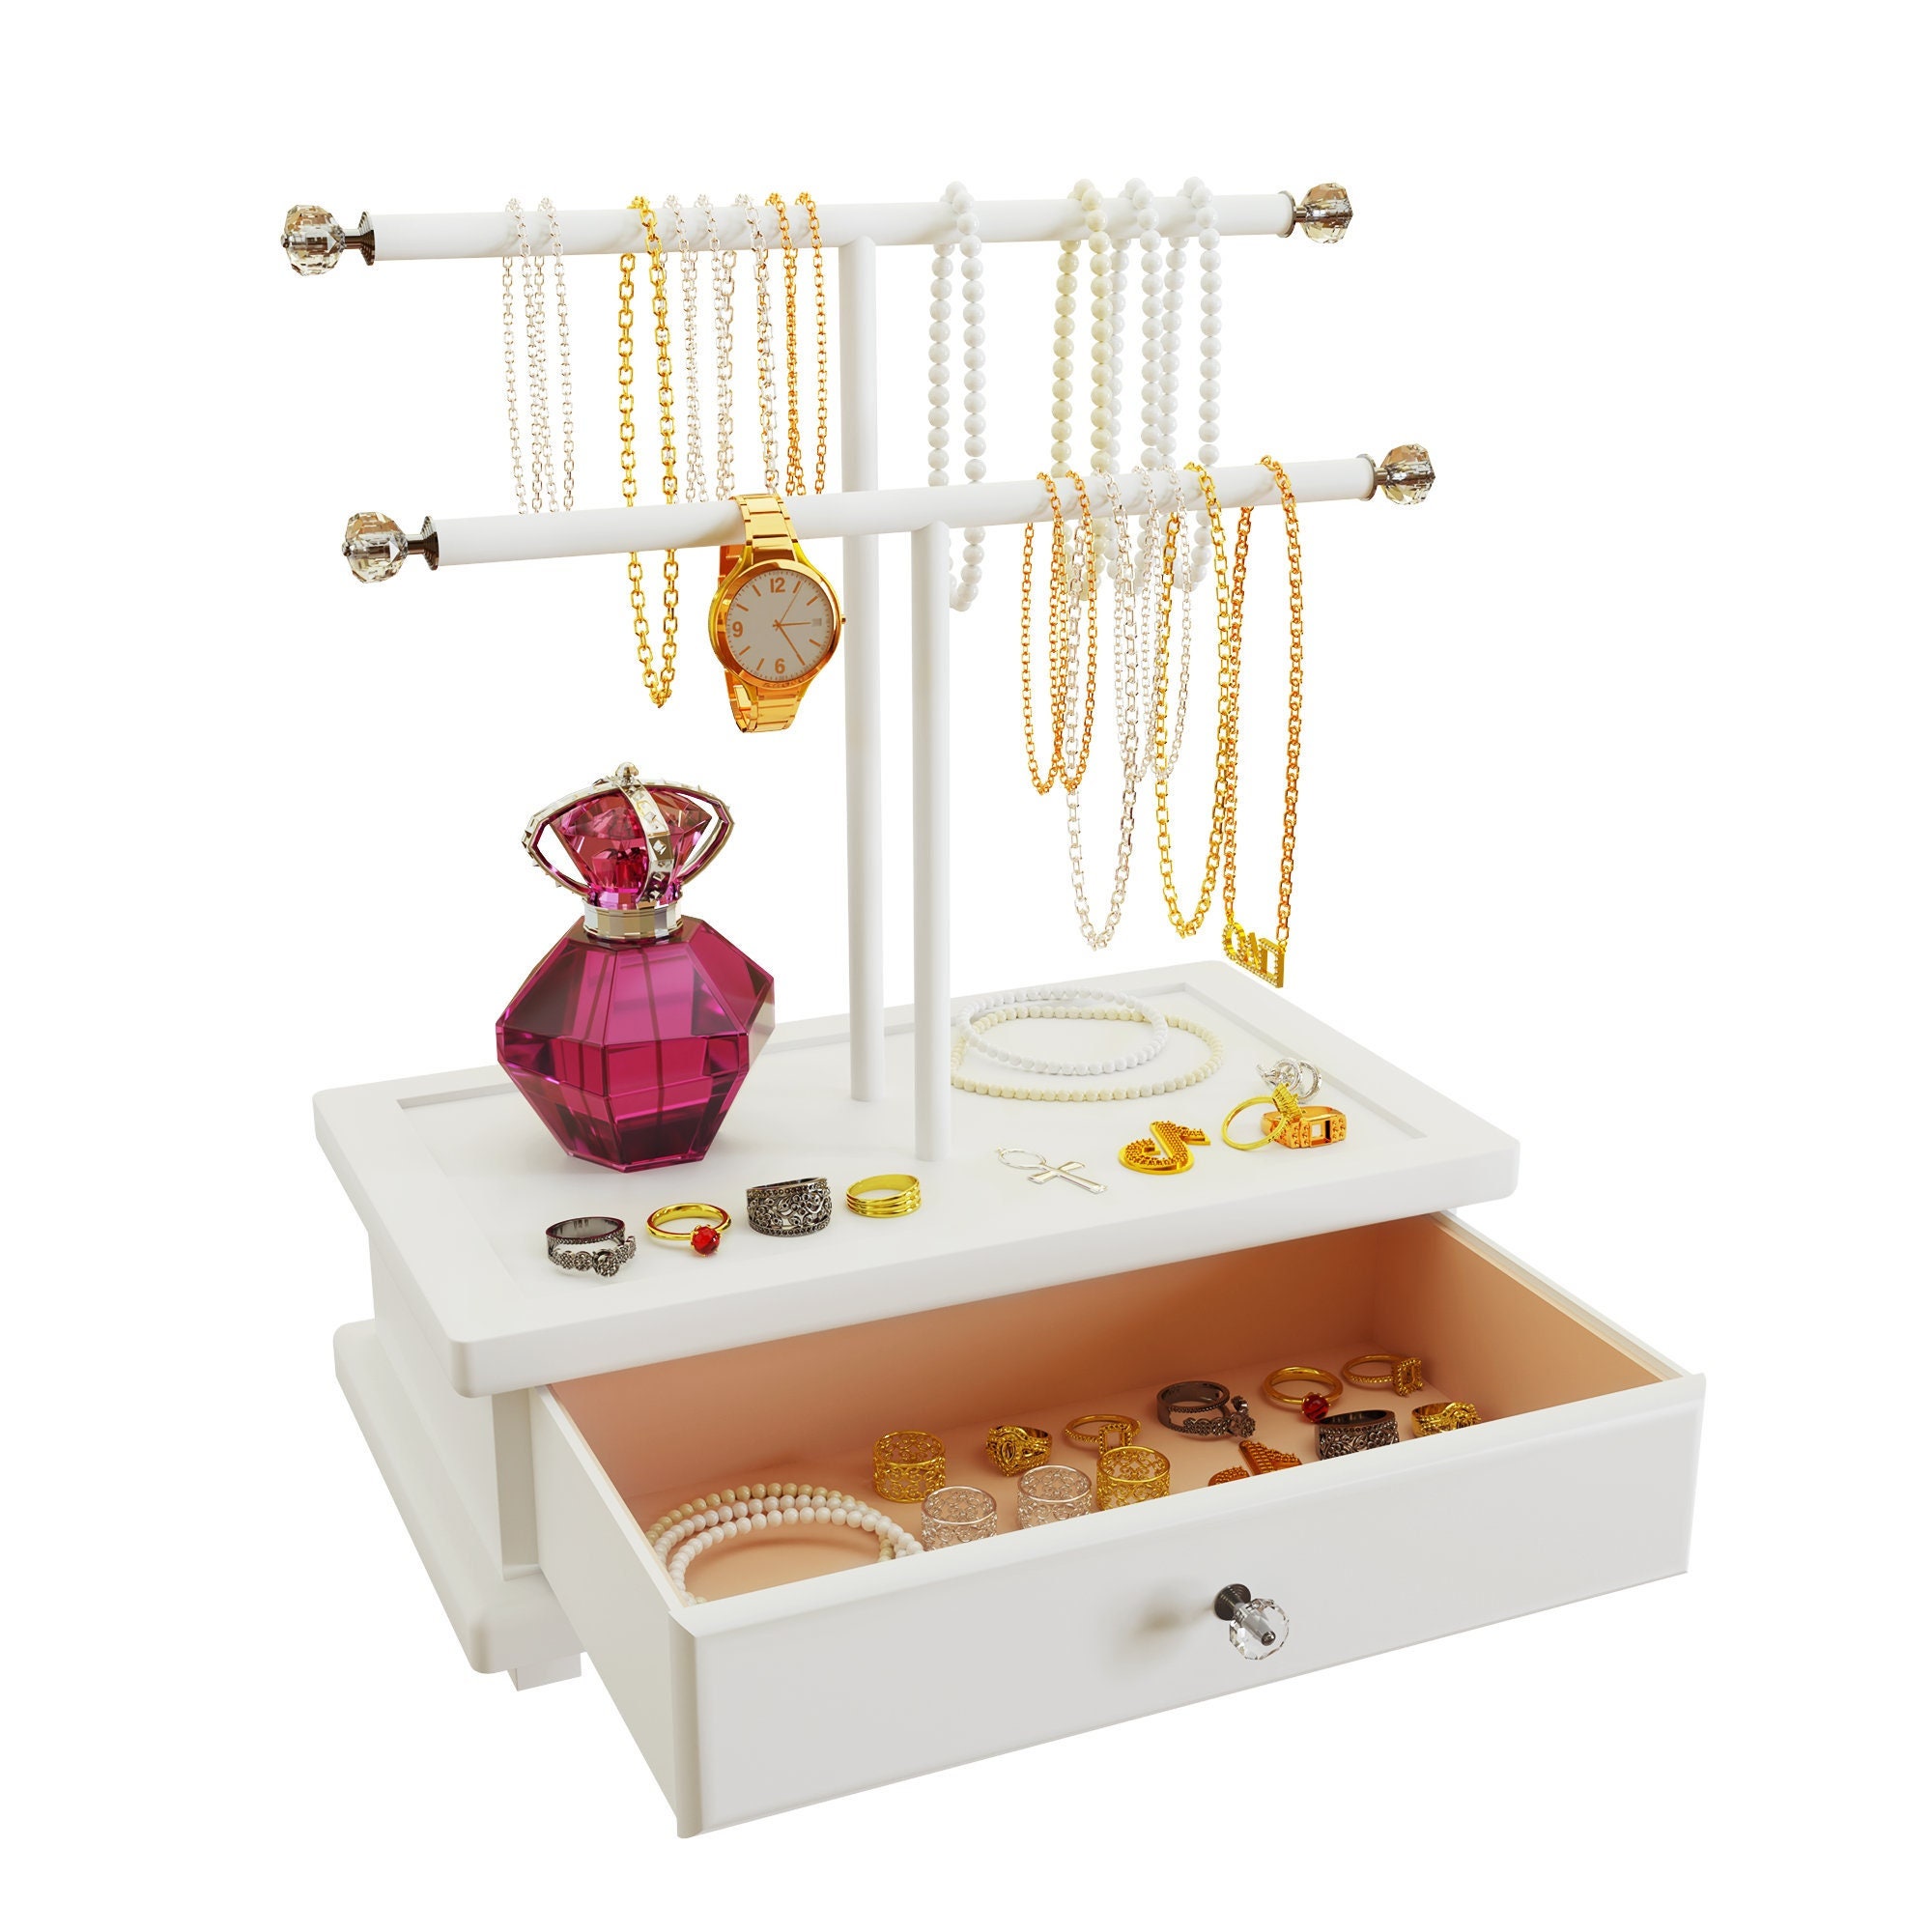 Jewelry Box for Women, Travel Jewelry Organizer Box 2 Layers